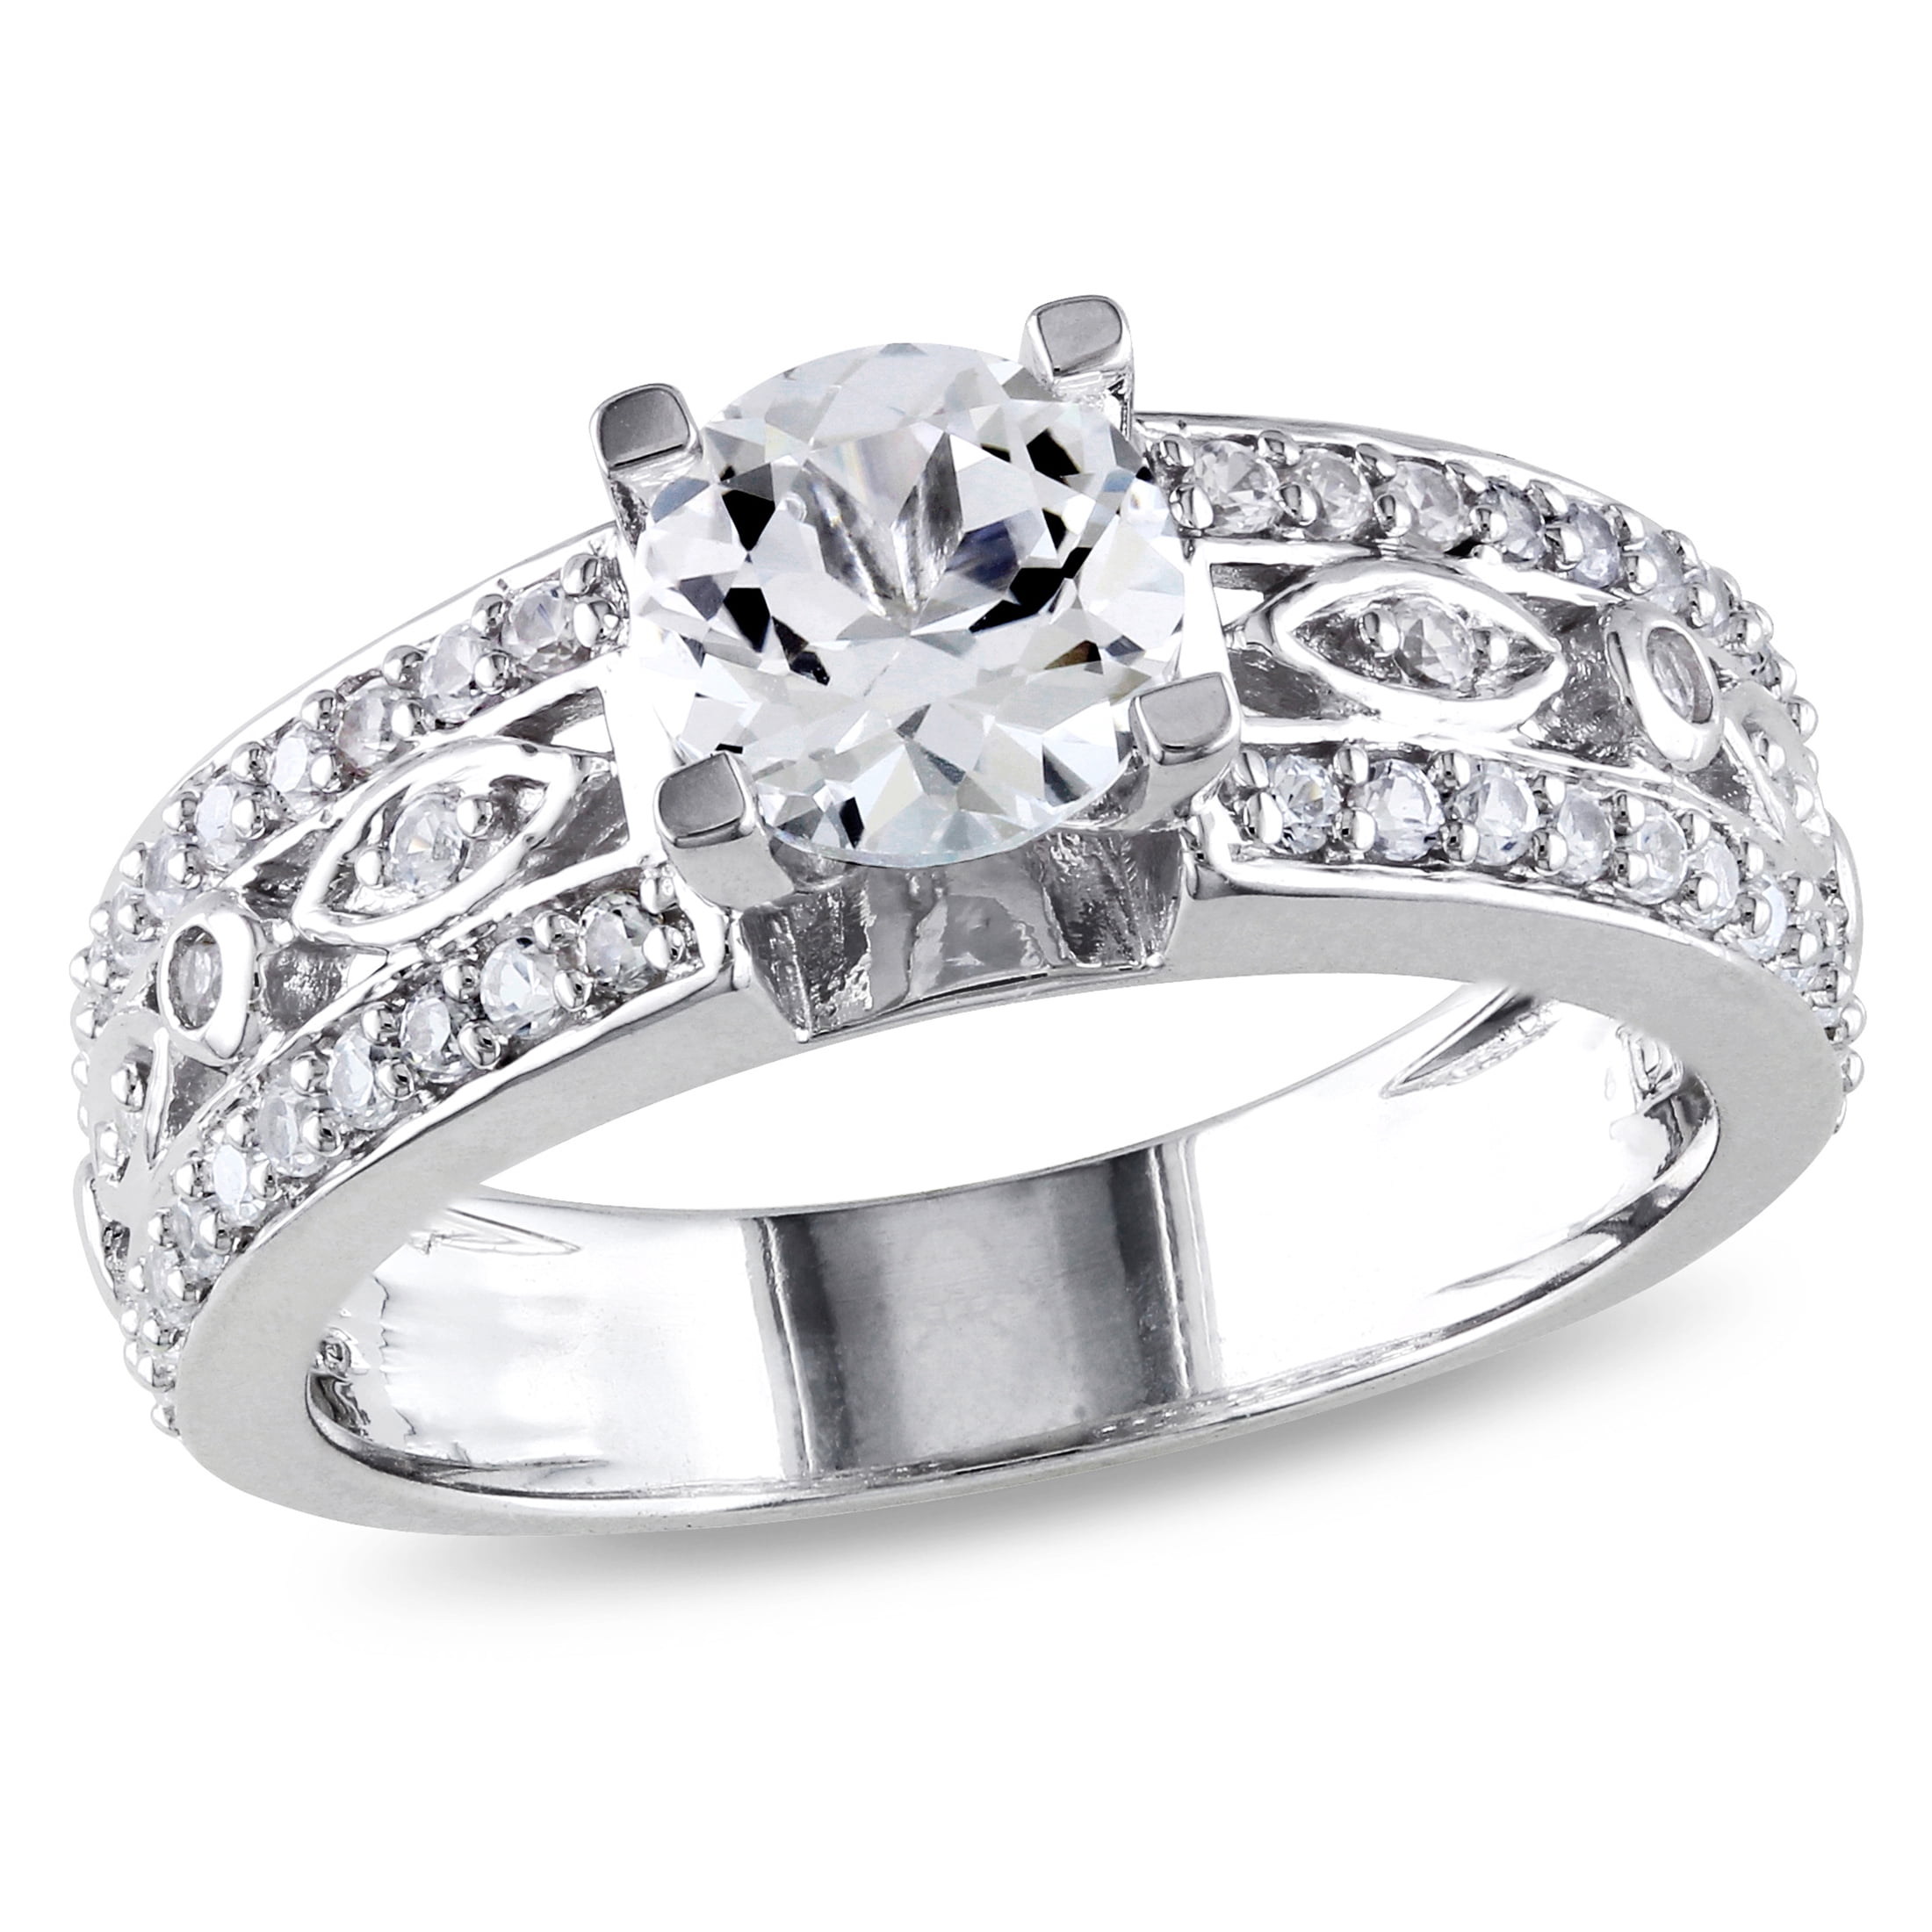 7/8 inch Sterling Silver Filigree Diamond-shaped Ring